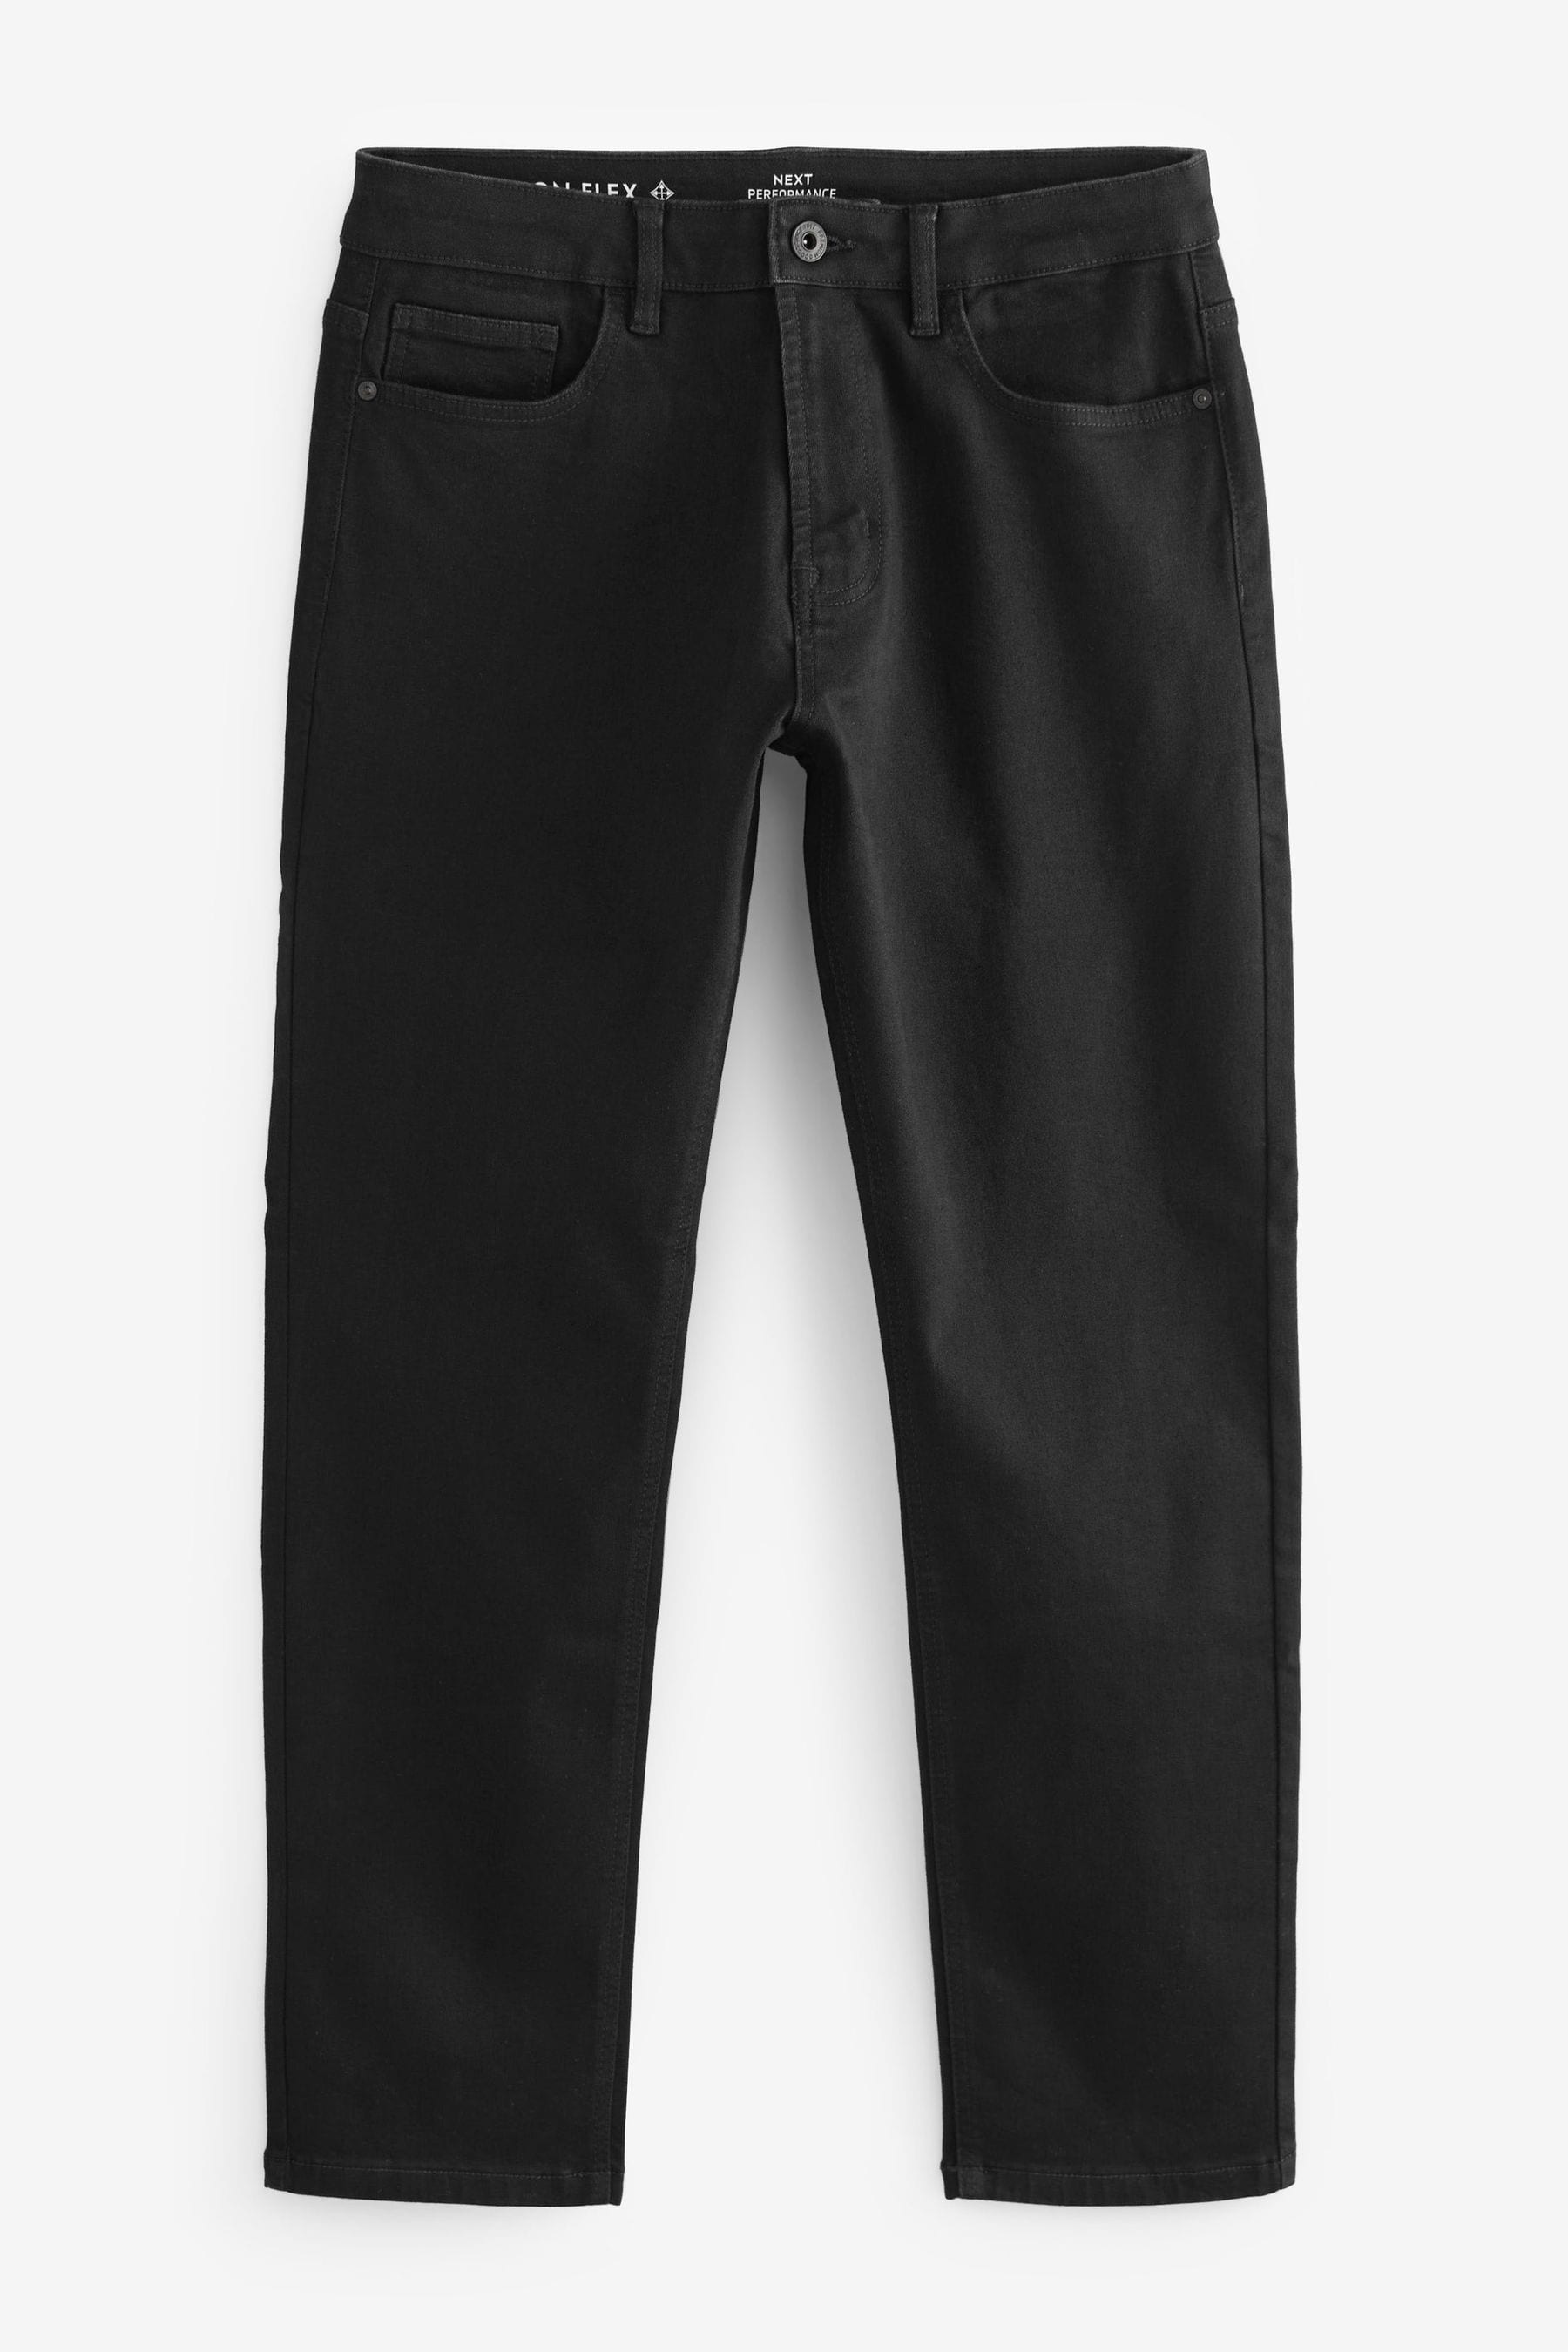 Buy Black Slim Fit Motion Flex Jeans from the Next UK online shop